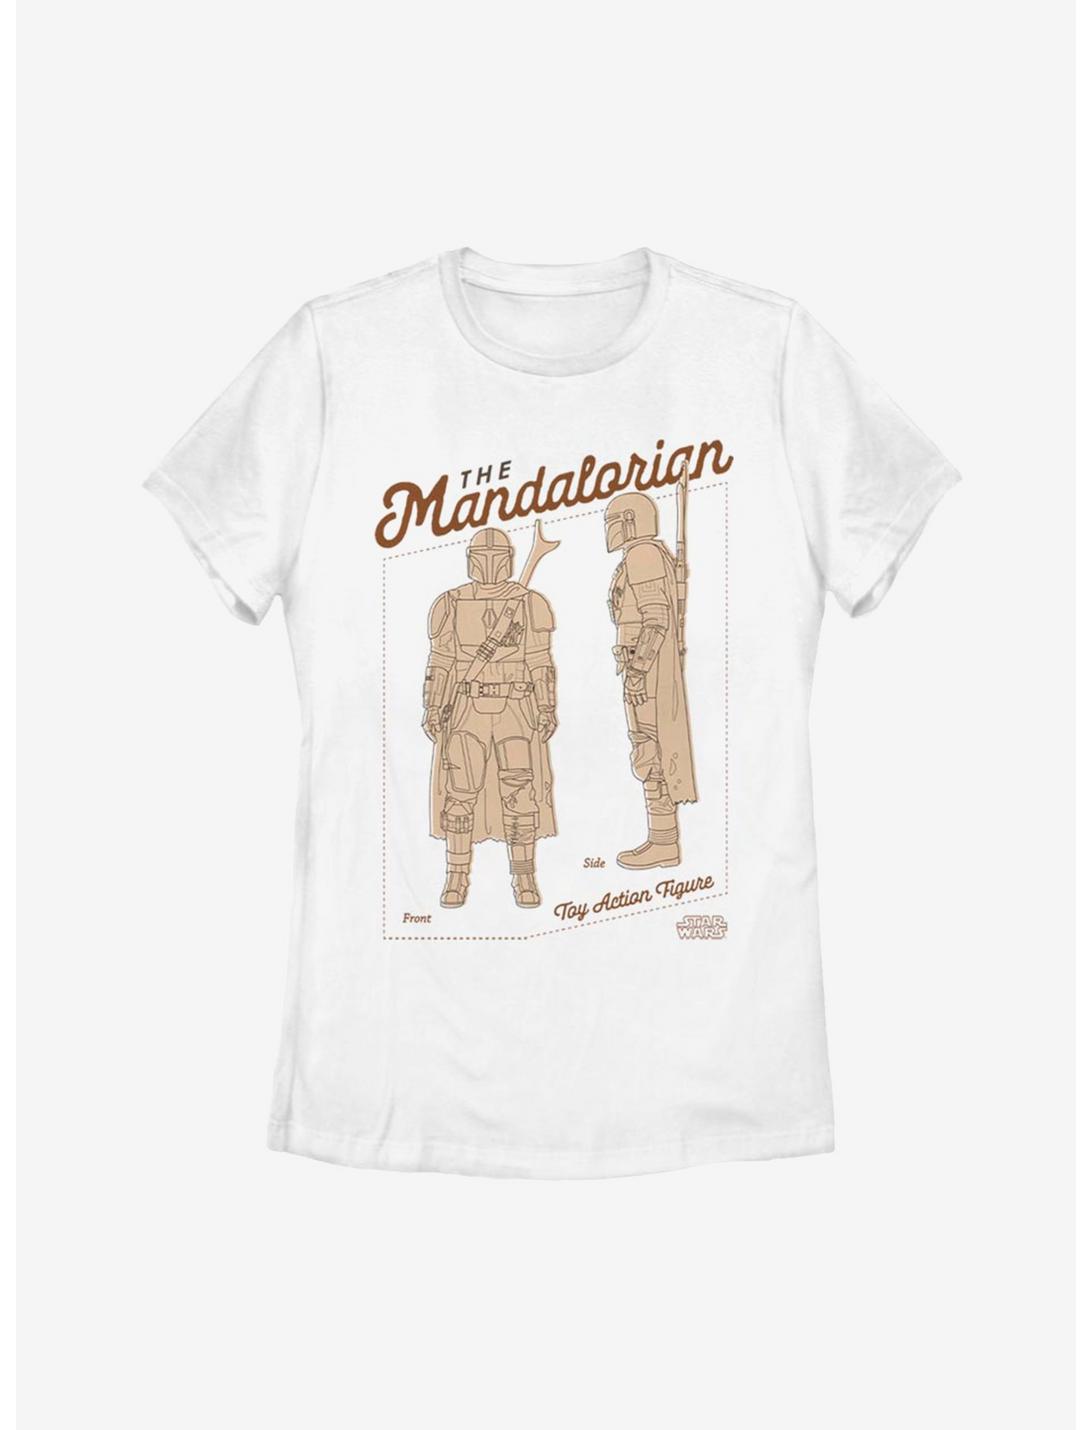 Plus Size Star Wars The Mandalorian Action Figure Womens T-Shirt, WHITE, hi-res